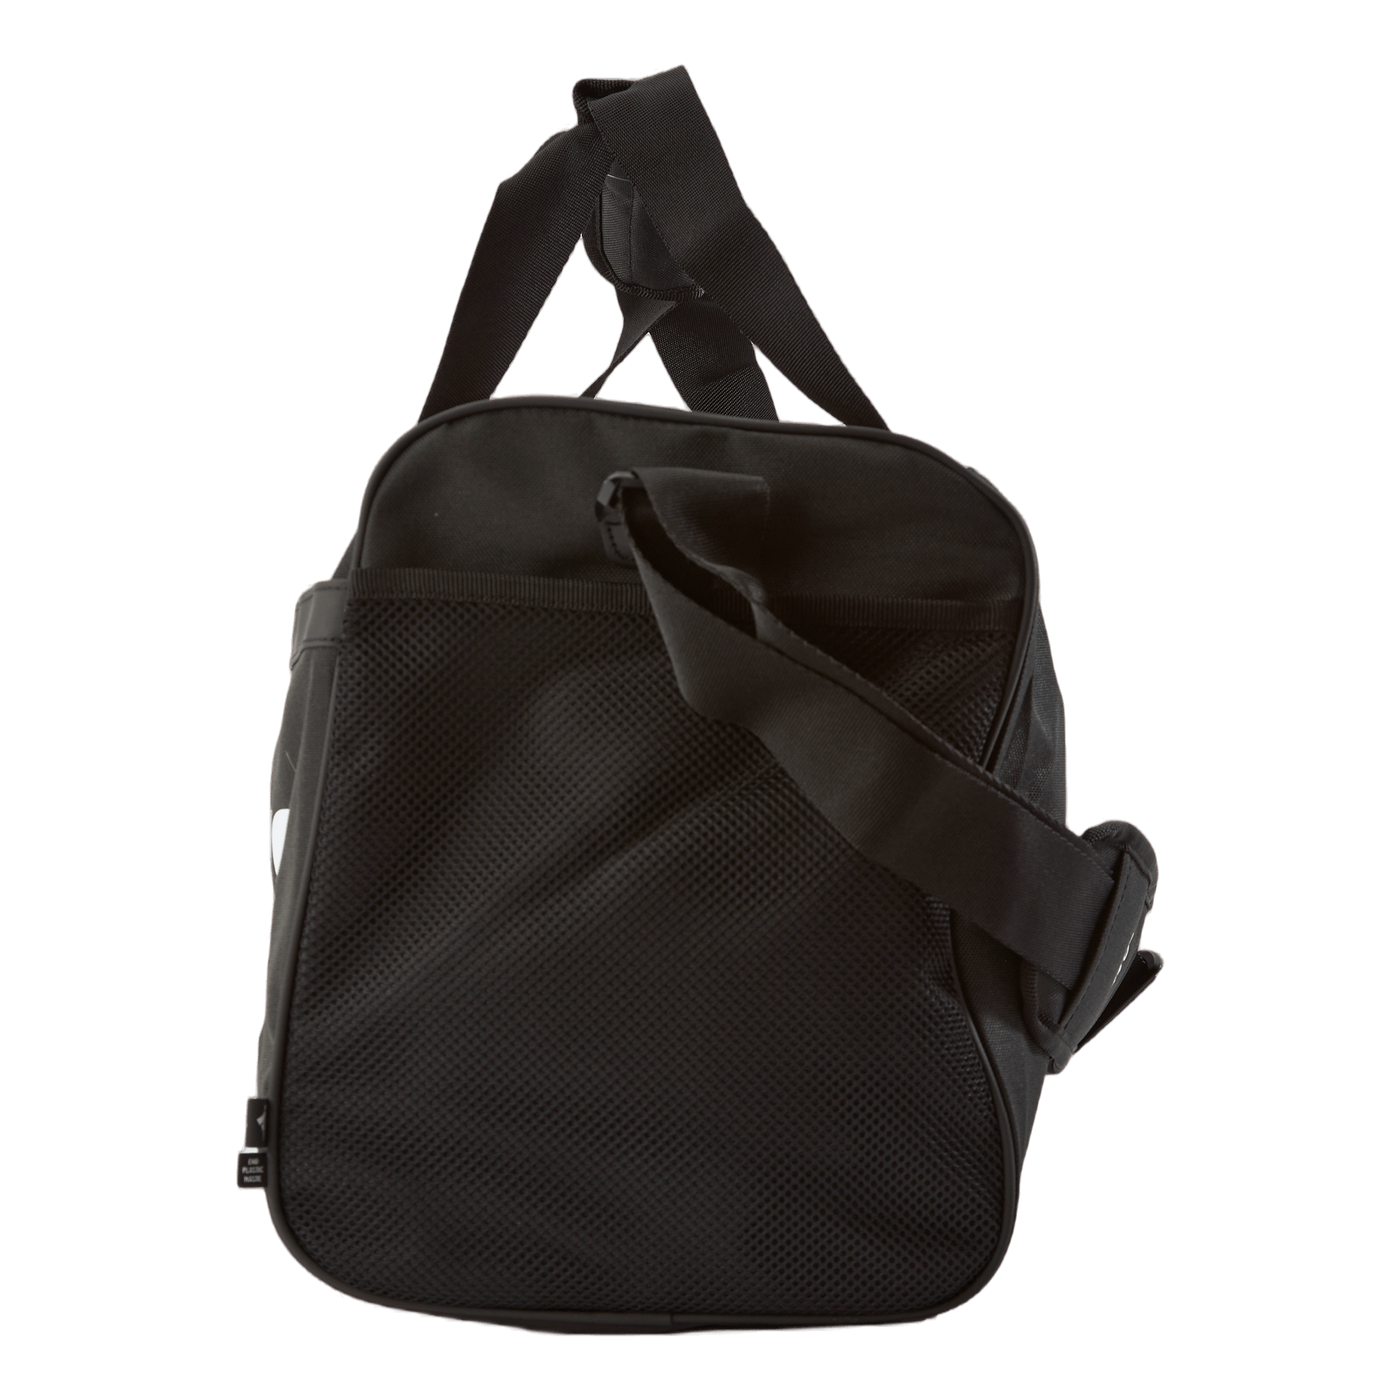 Essentials Linear Duffel Bag Medium Black / White